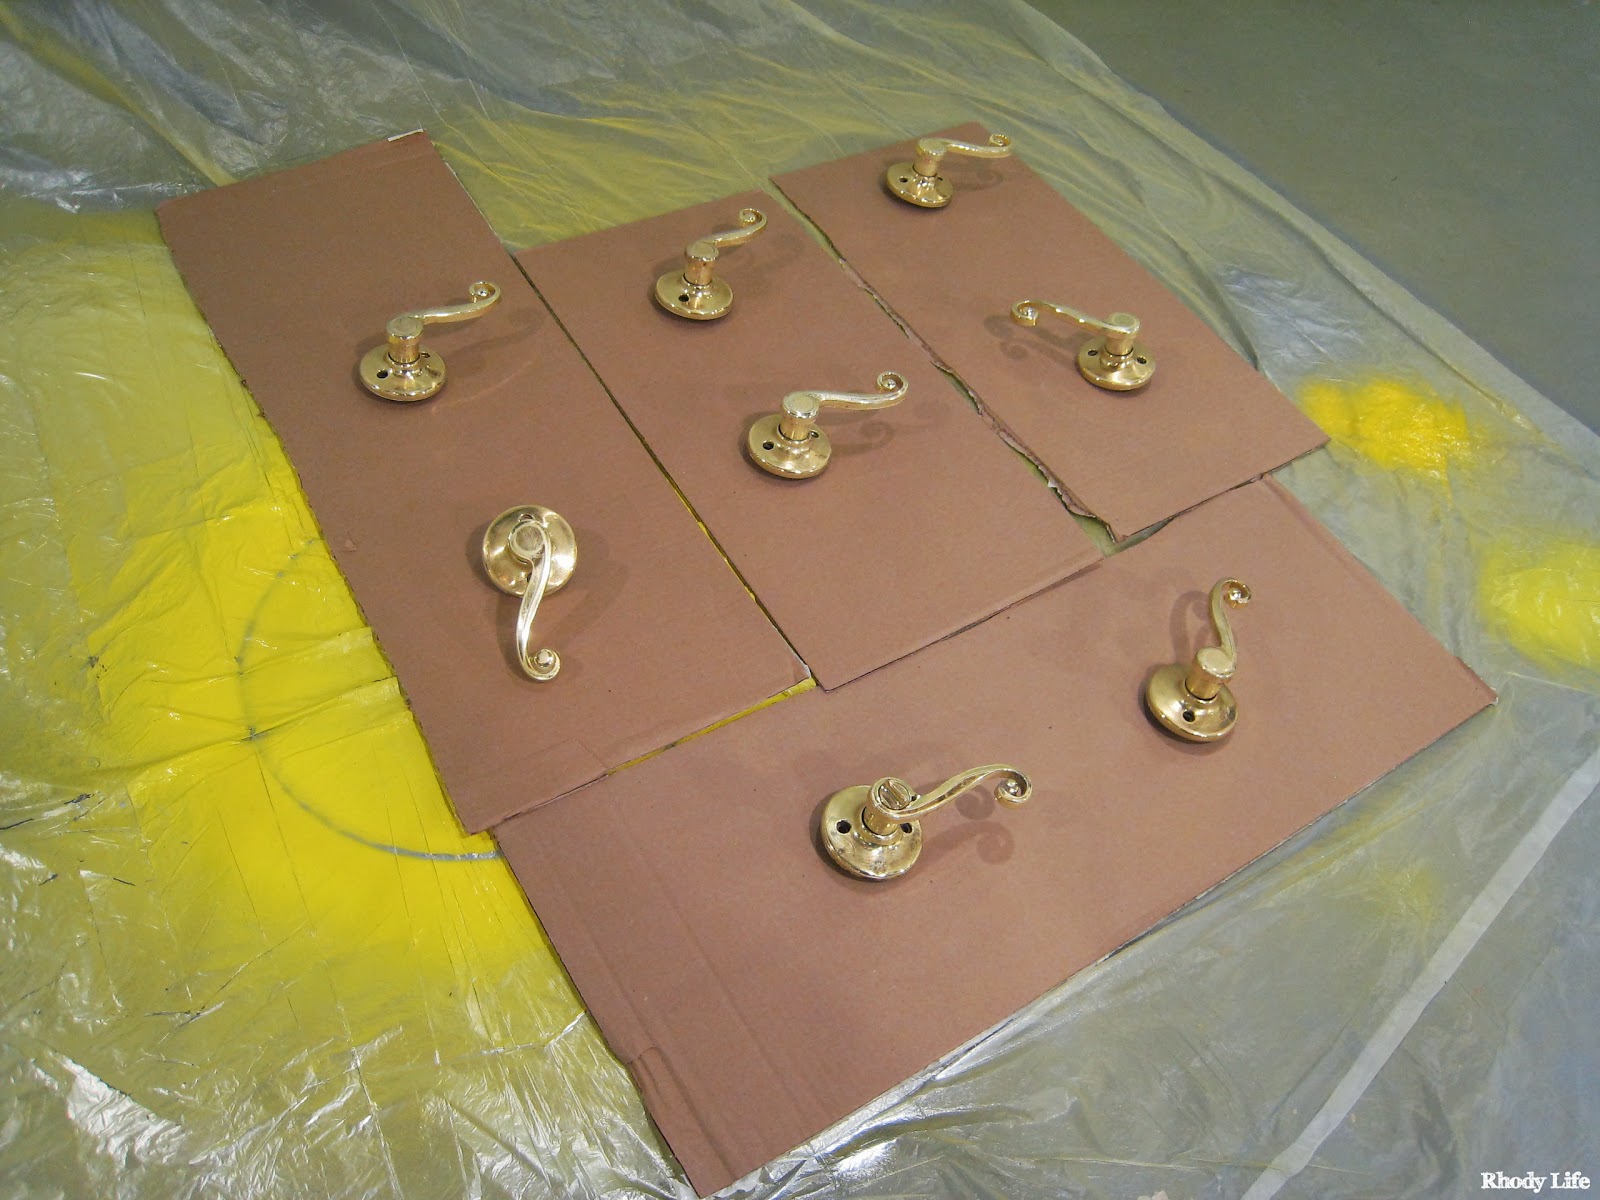 Painting Brass Hardware